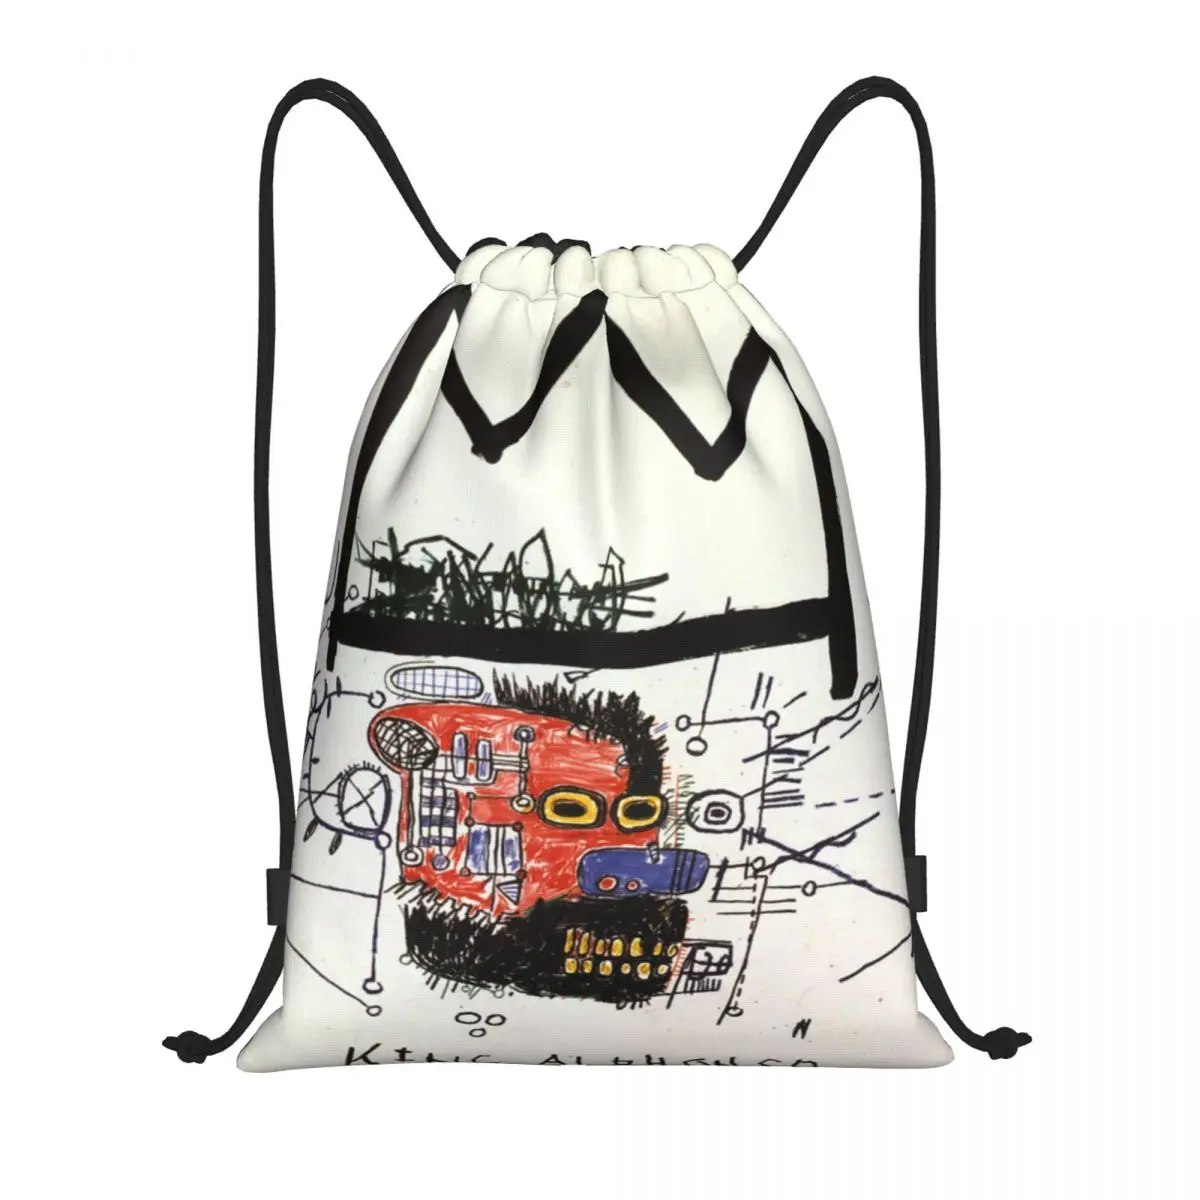 Custom King Alphonso Drawstring Backpack Bags Men Women Lightweight Jean Michel Basquiats Gym Sports Sackpack Sacks Traveling